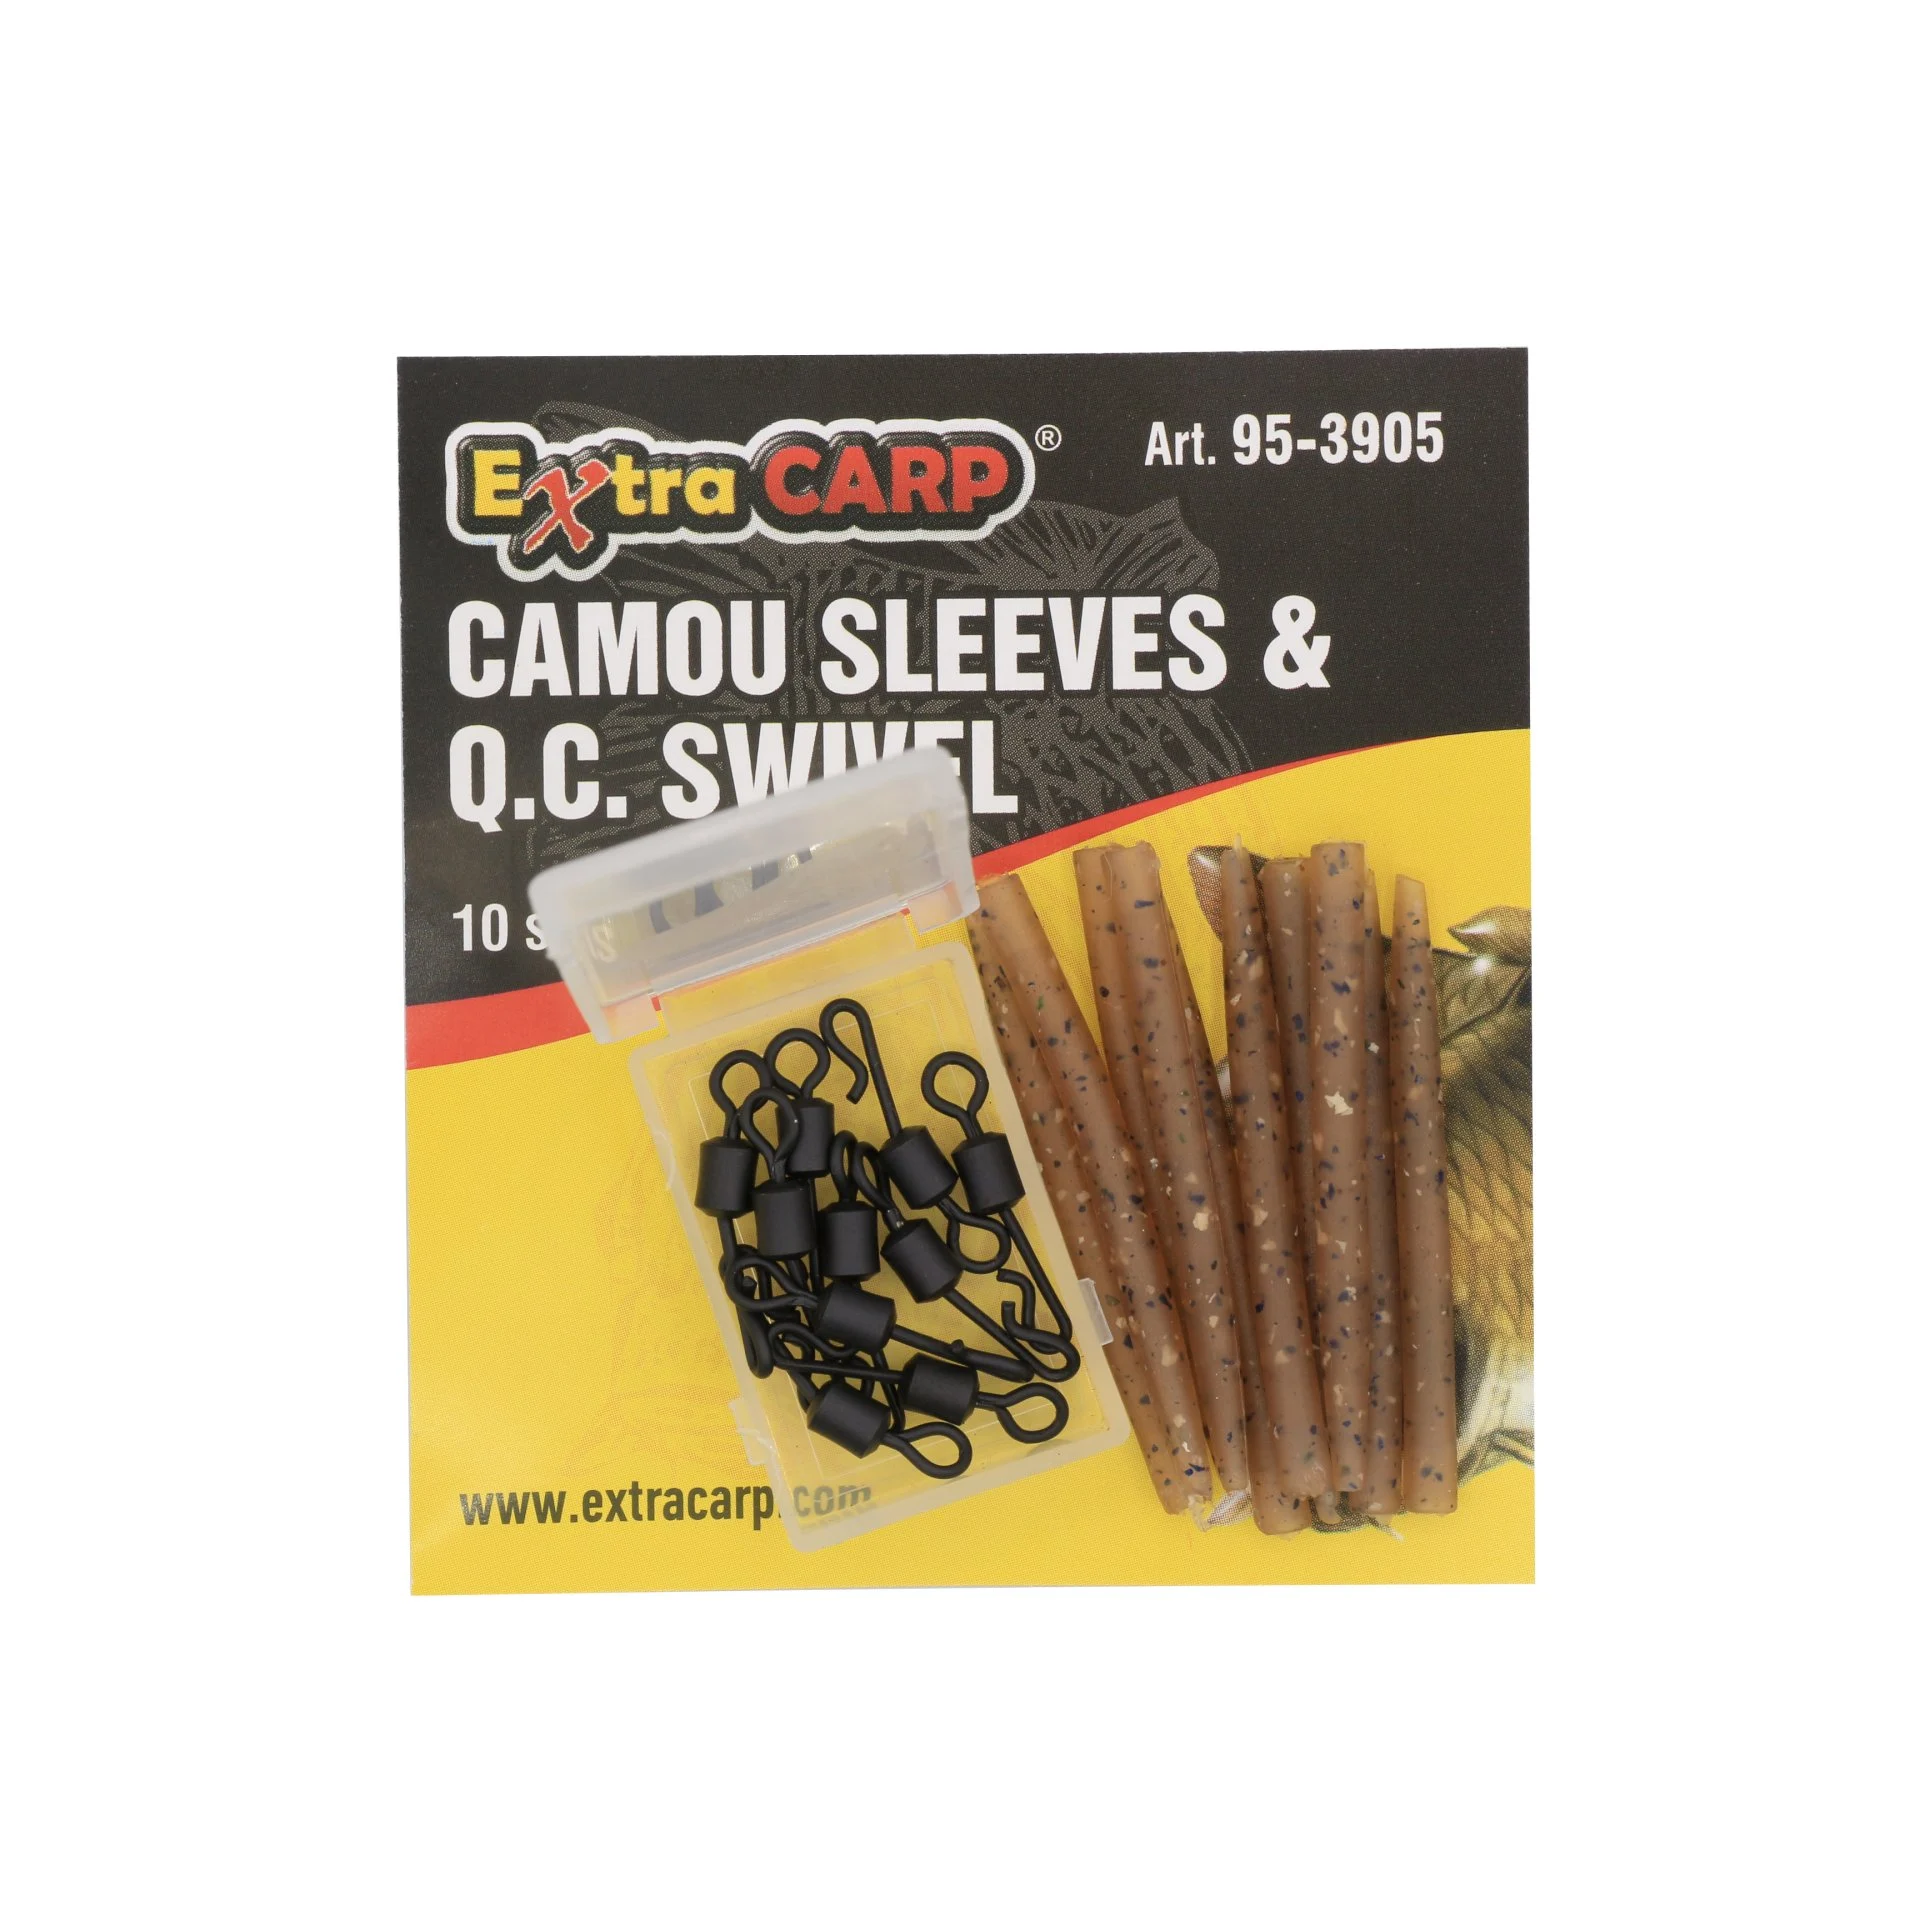 Extra Carp Camou Sleeves & Q.C. Swivel 10 Sets